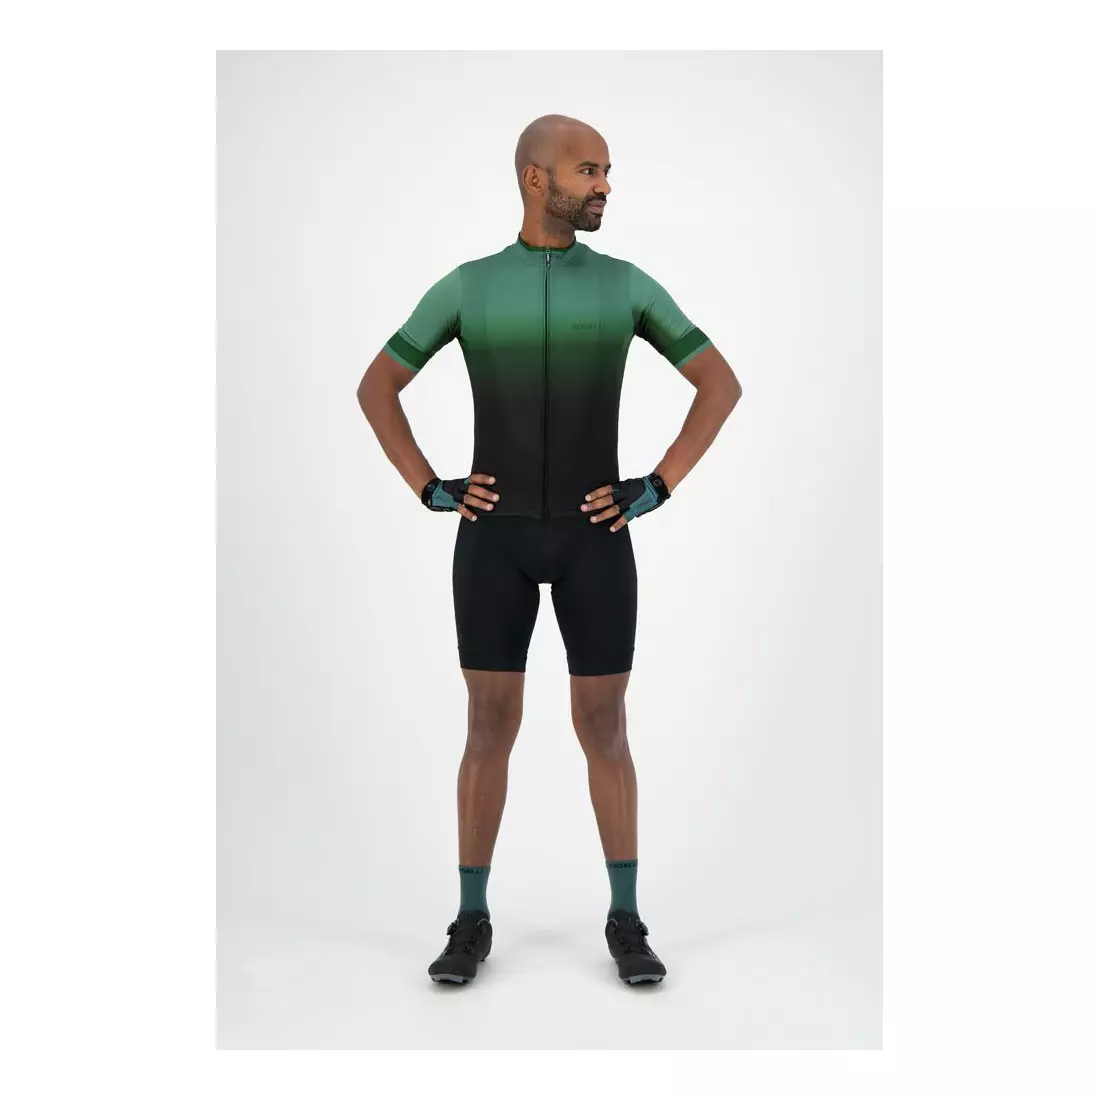 ROGELLI pánske tričko na bicykel HORIZON black/green 001.417